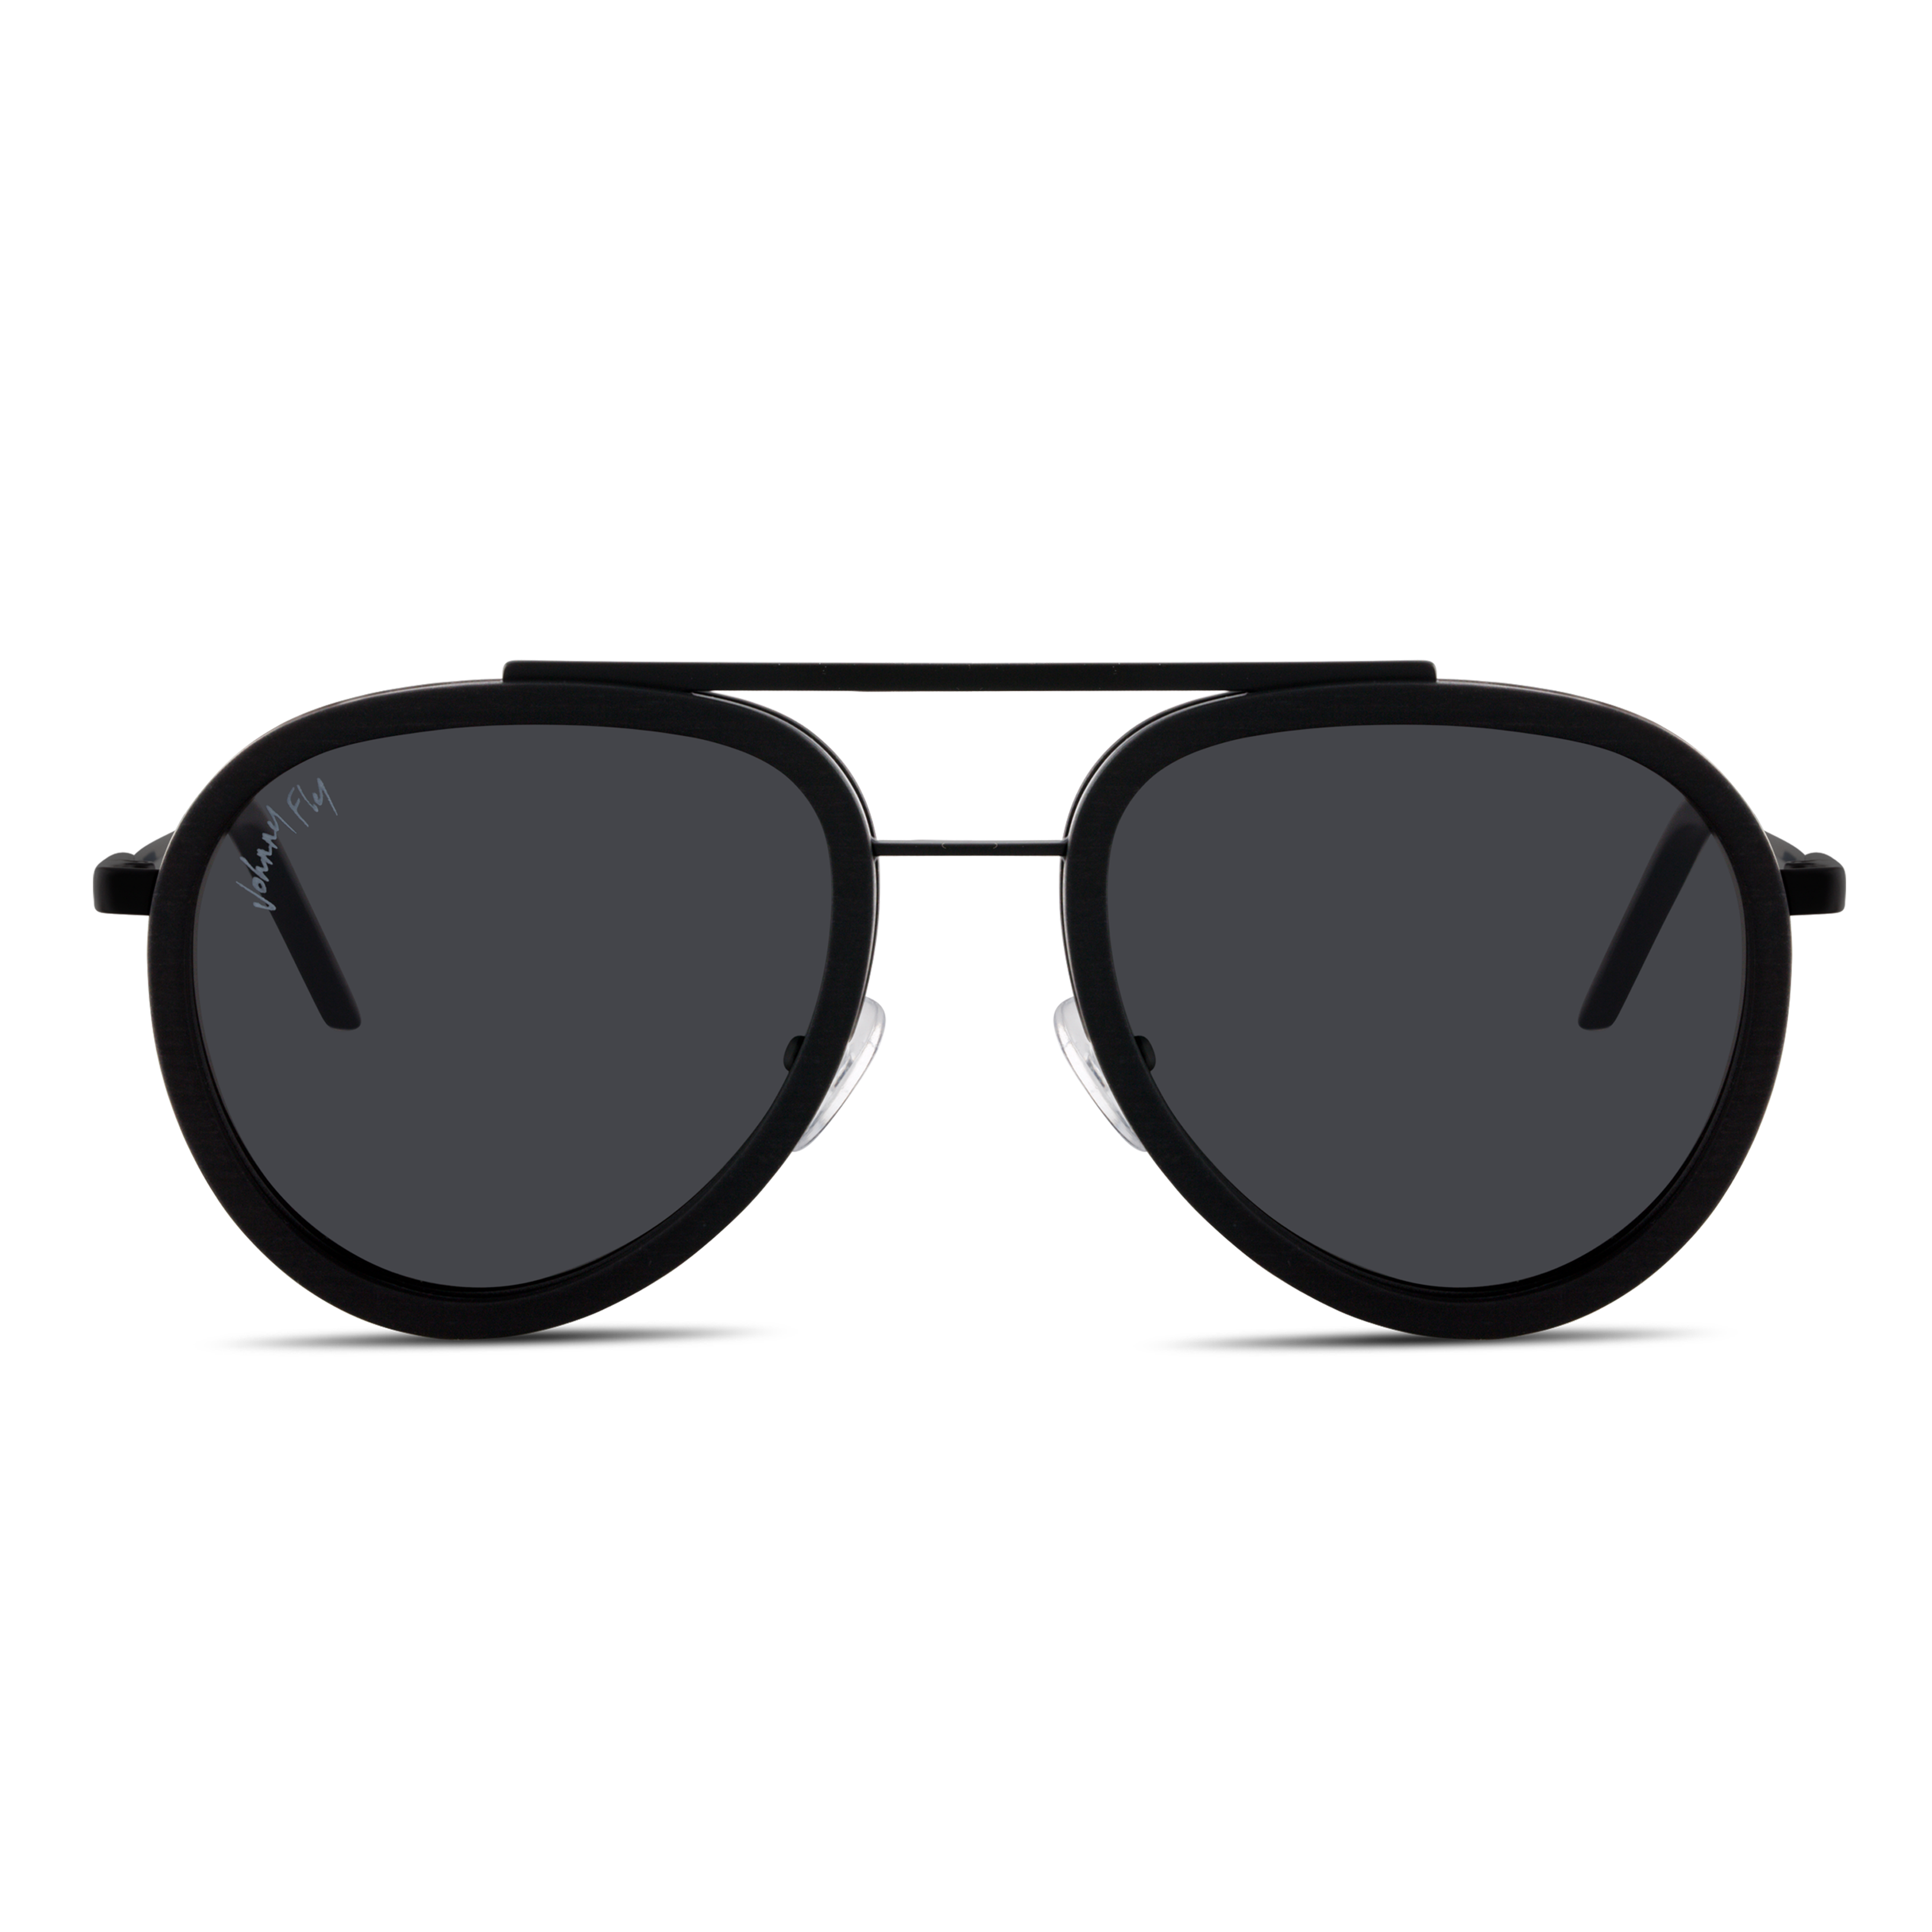 KIRK - Black - Sunglasses - Johnny Fly Eyewear | 